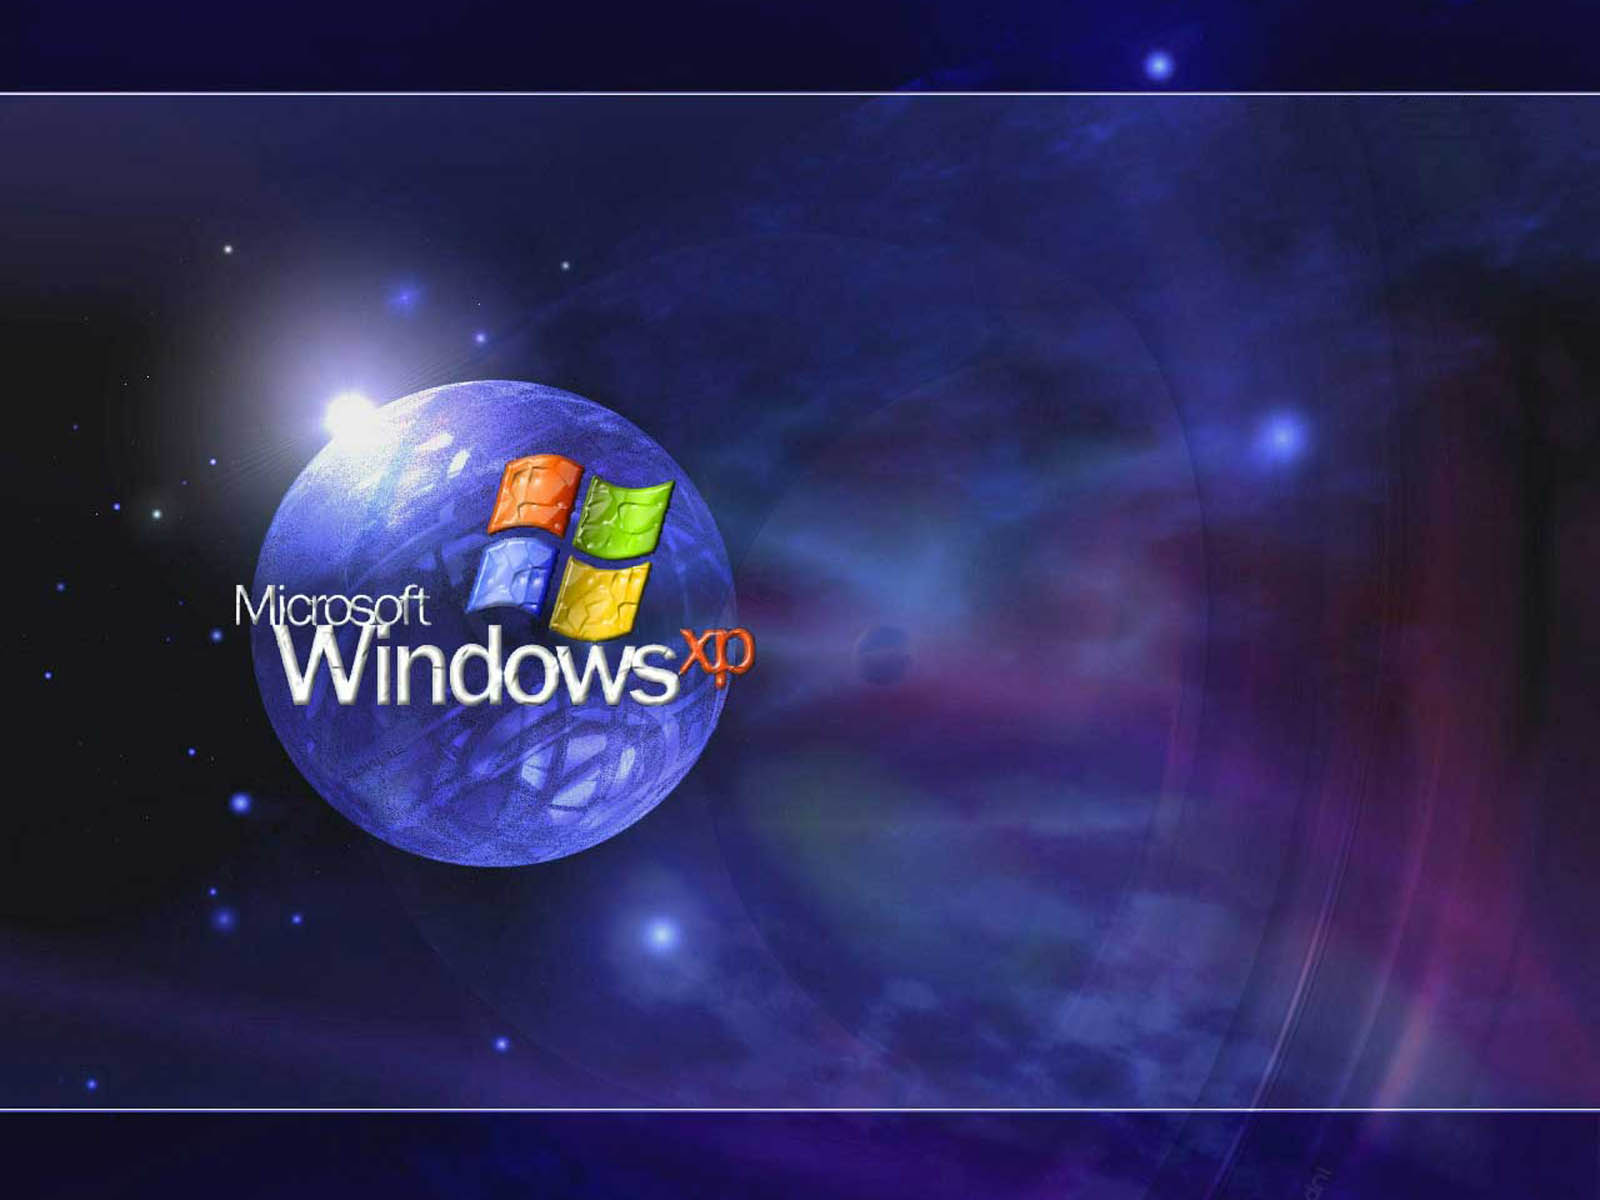 Windows xp wallpapers for desktop free download,desktop wallpaper